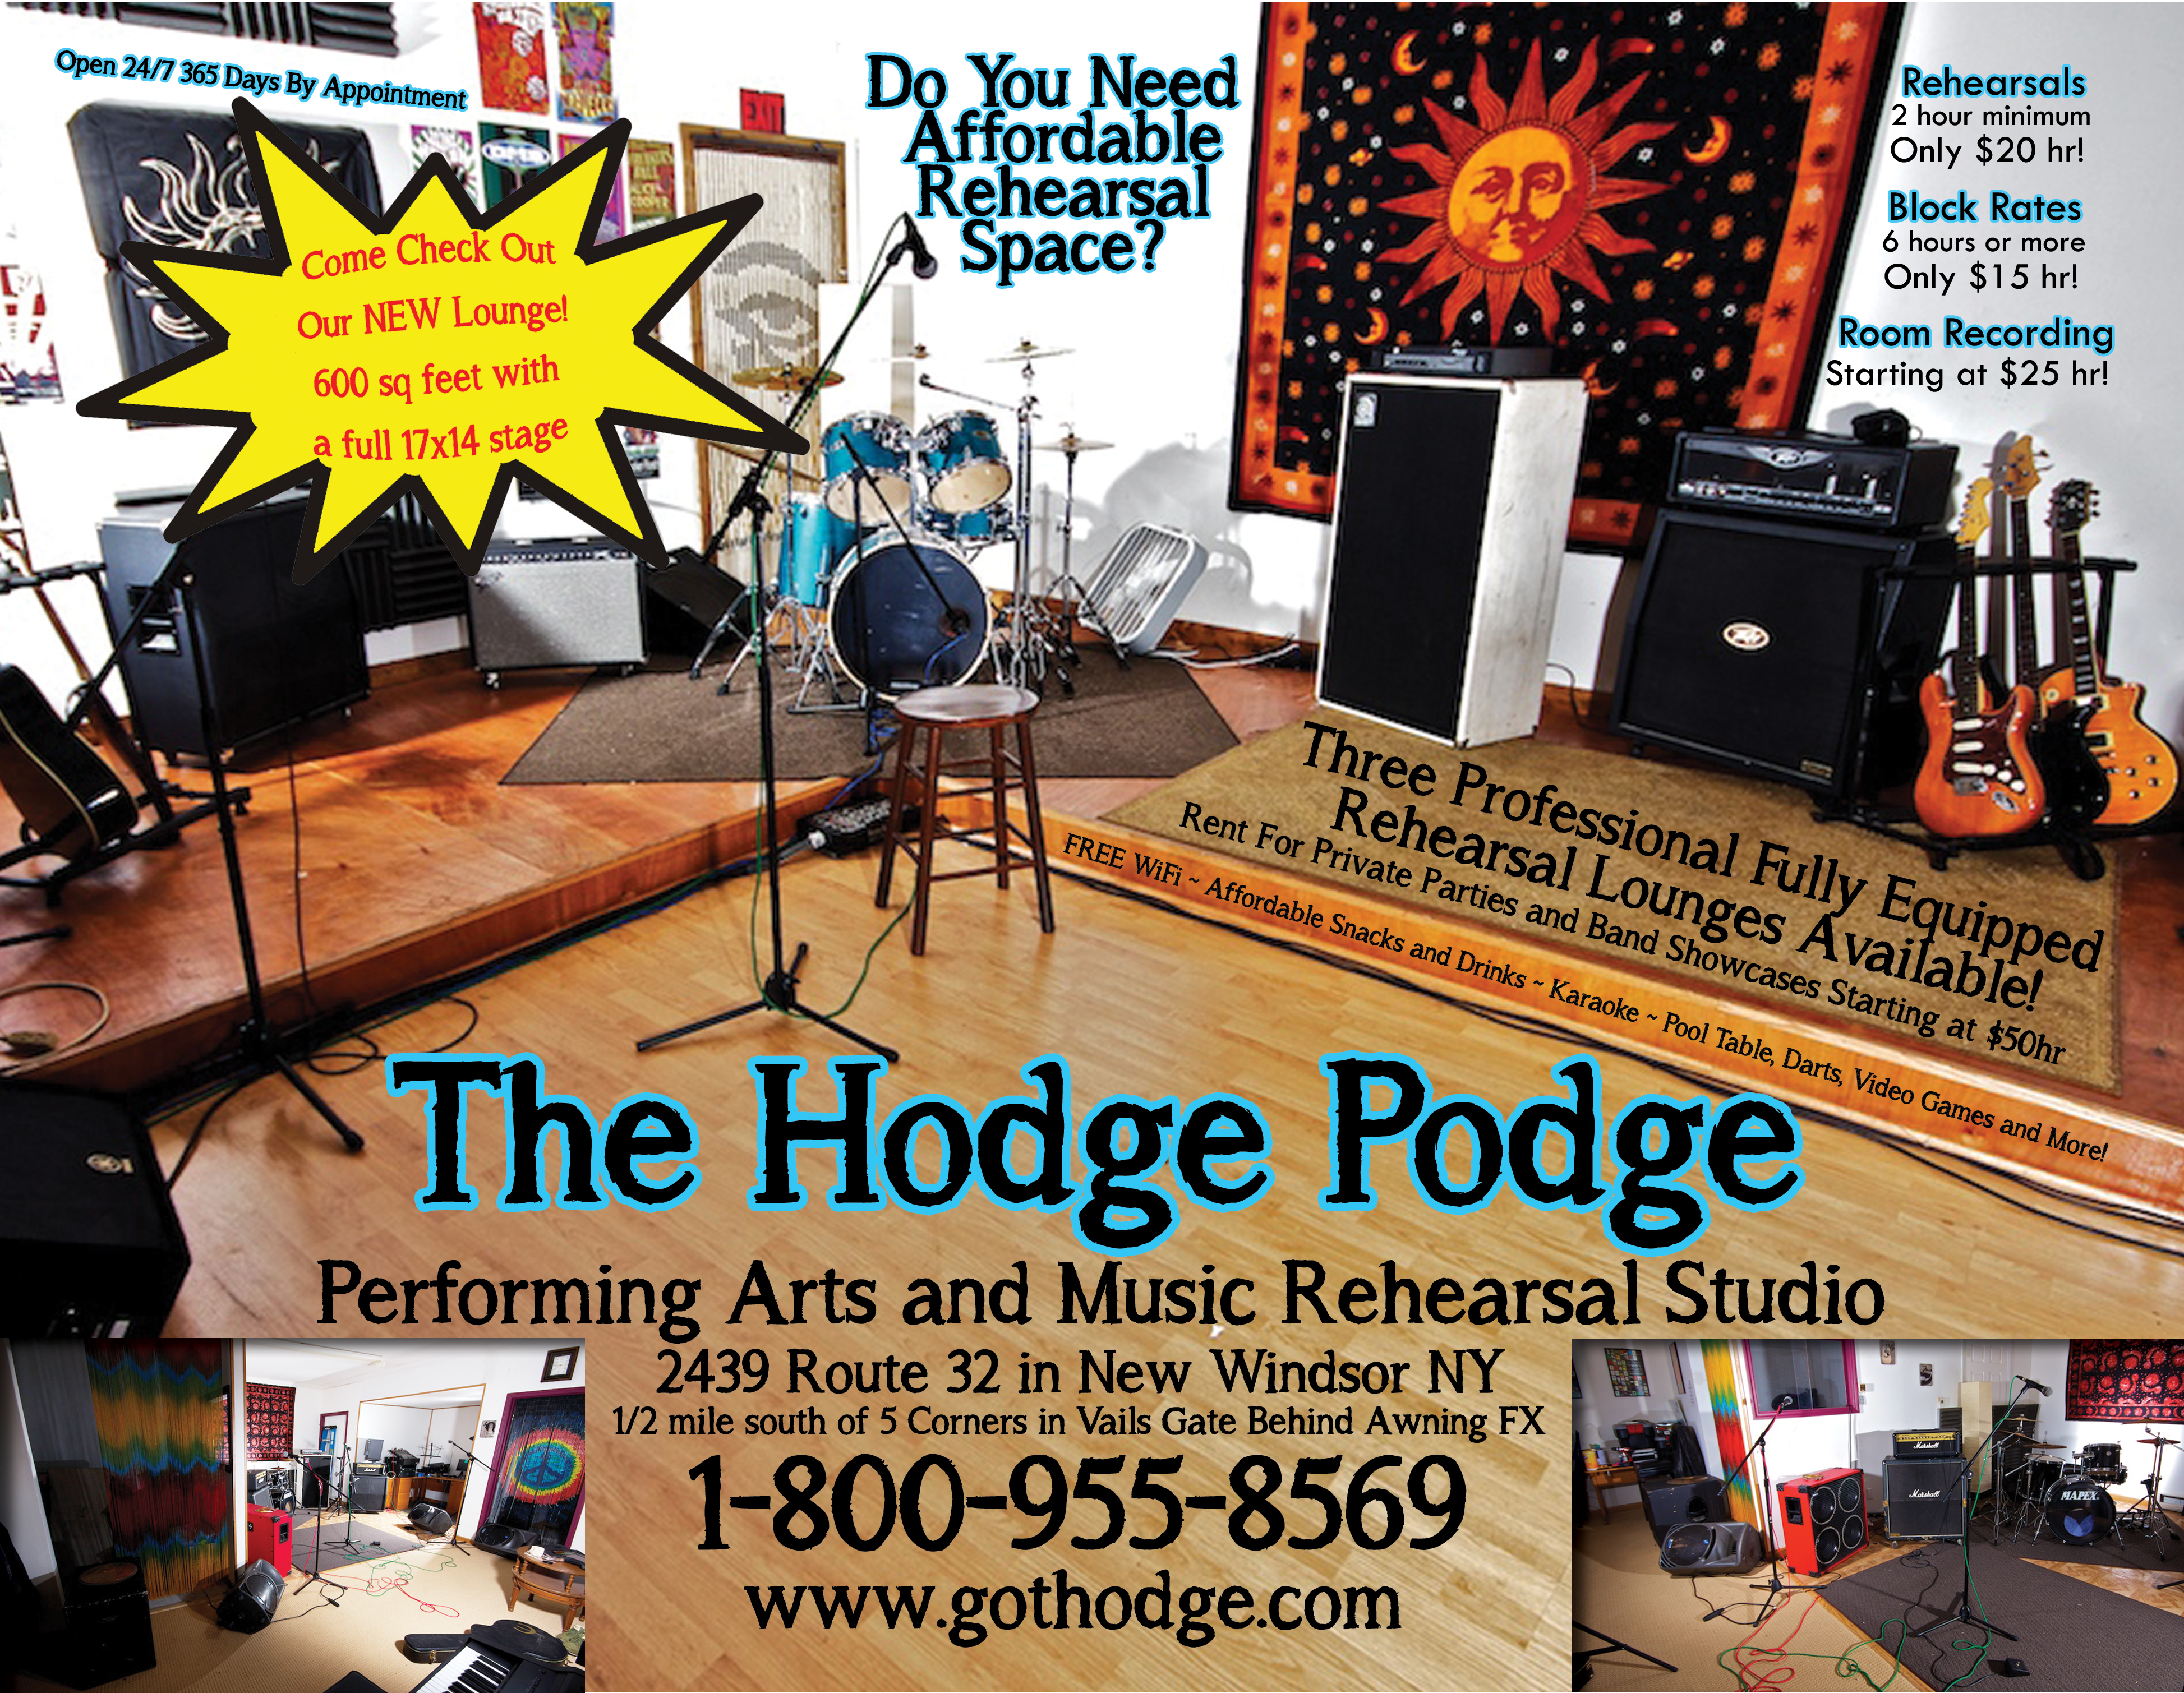 The Hodge Podge Music Rehearsal Studio